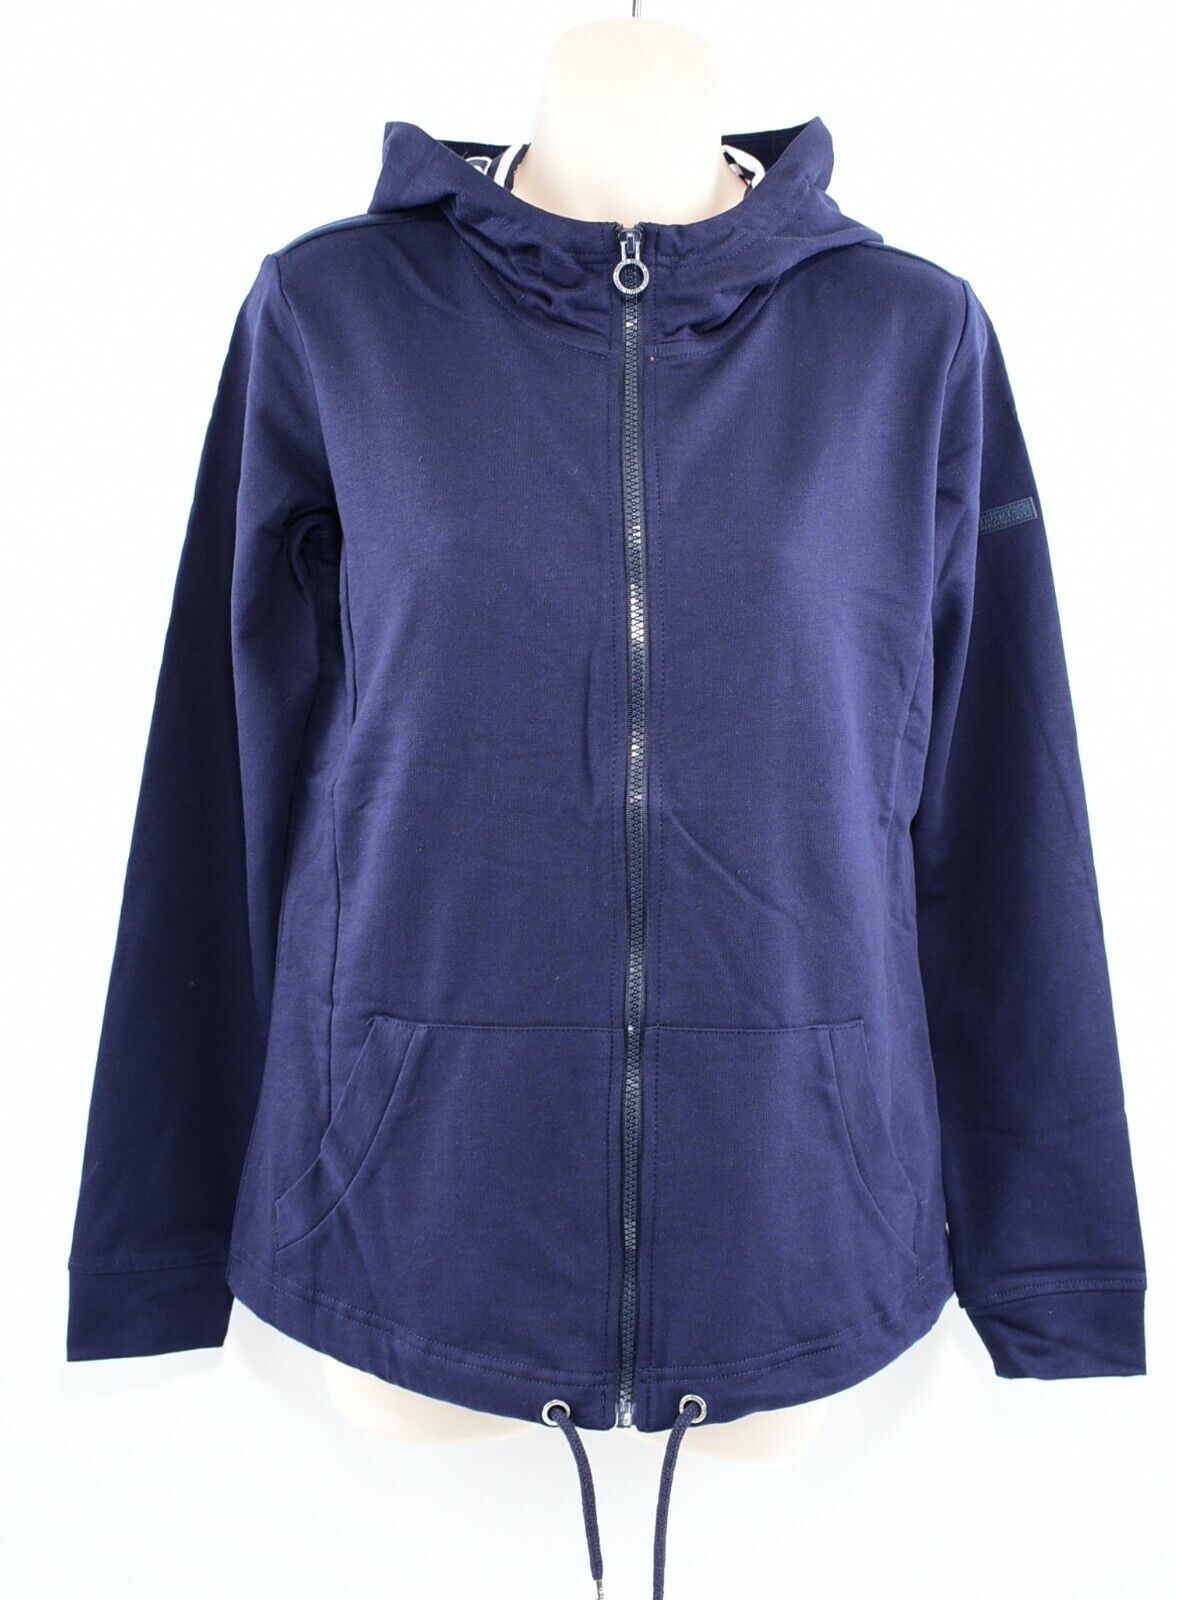 REGATTA Womens BAYARMA Zip Hoodie Jacket, Navy Blue, size S /UK 10